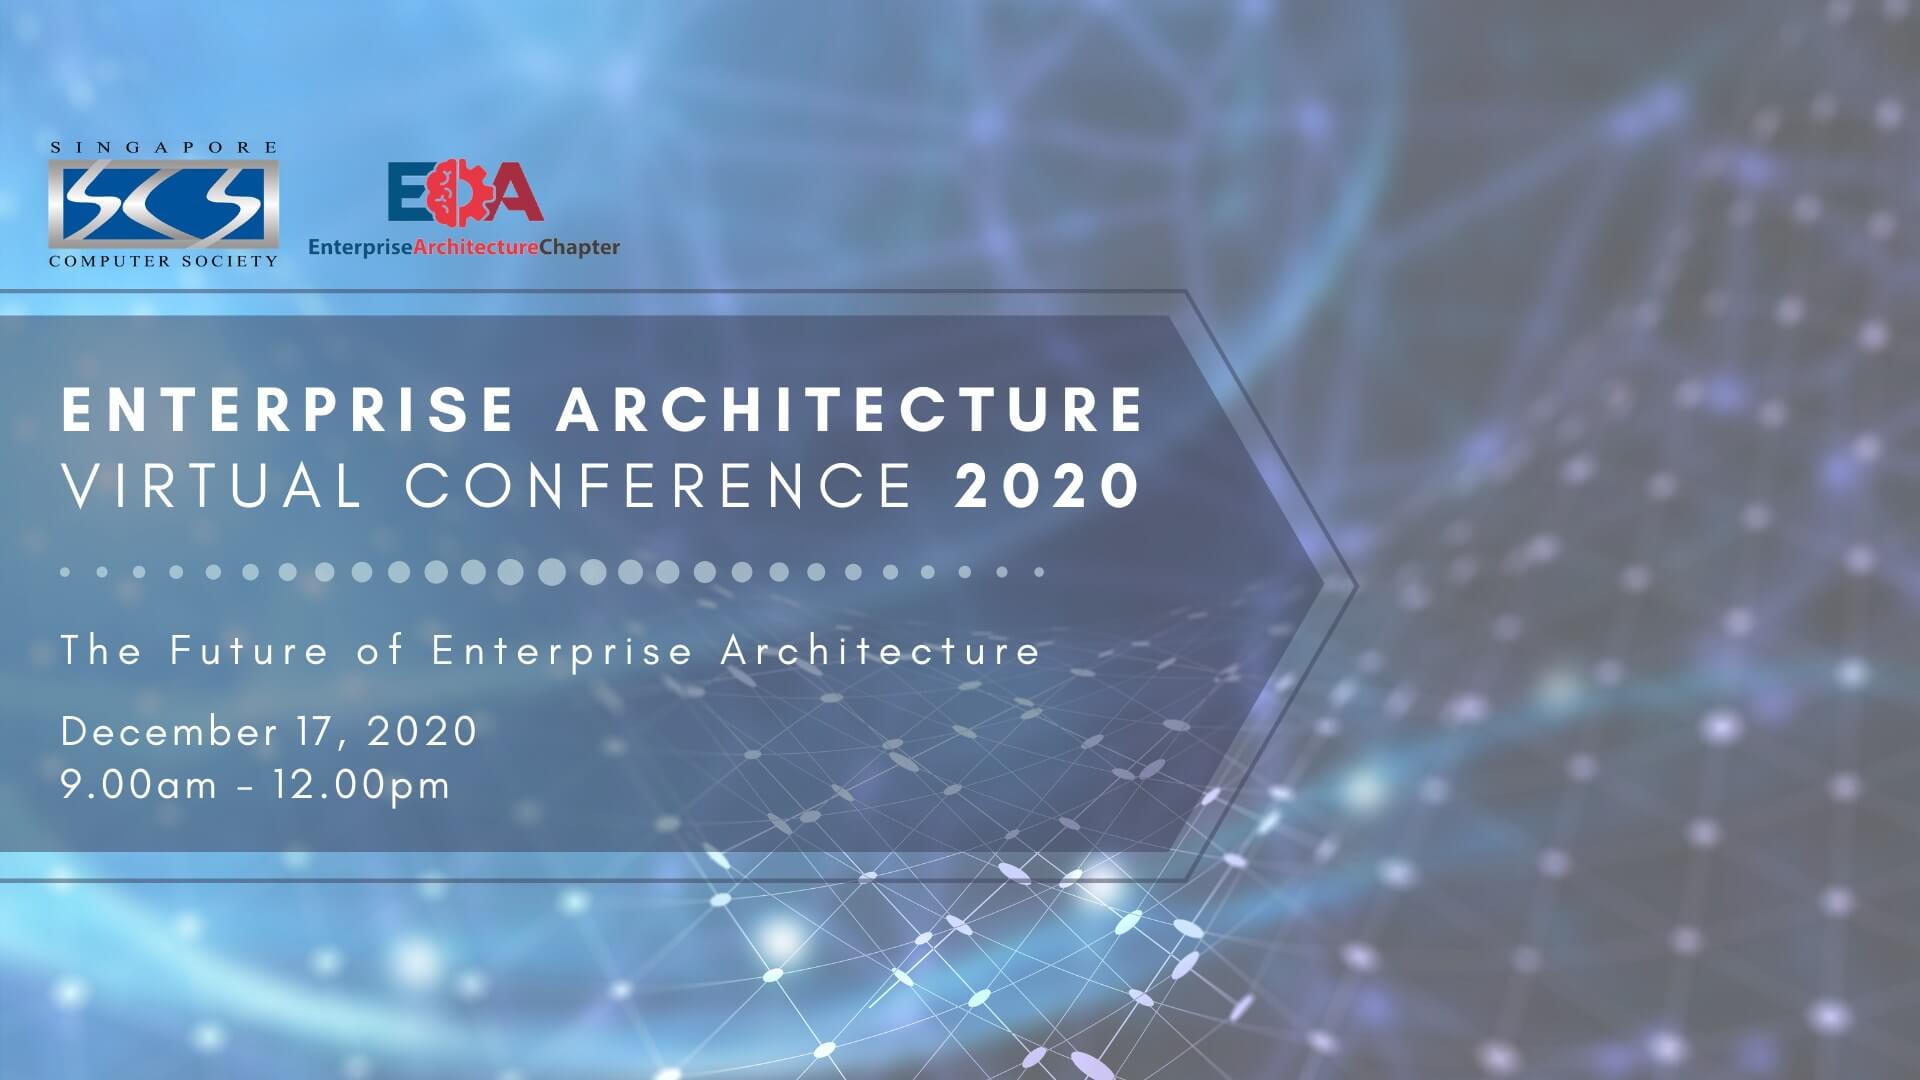 EnterpriseArchitectureVirtualConference2020 